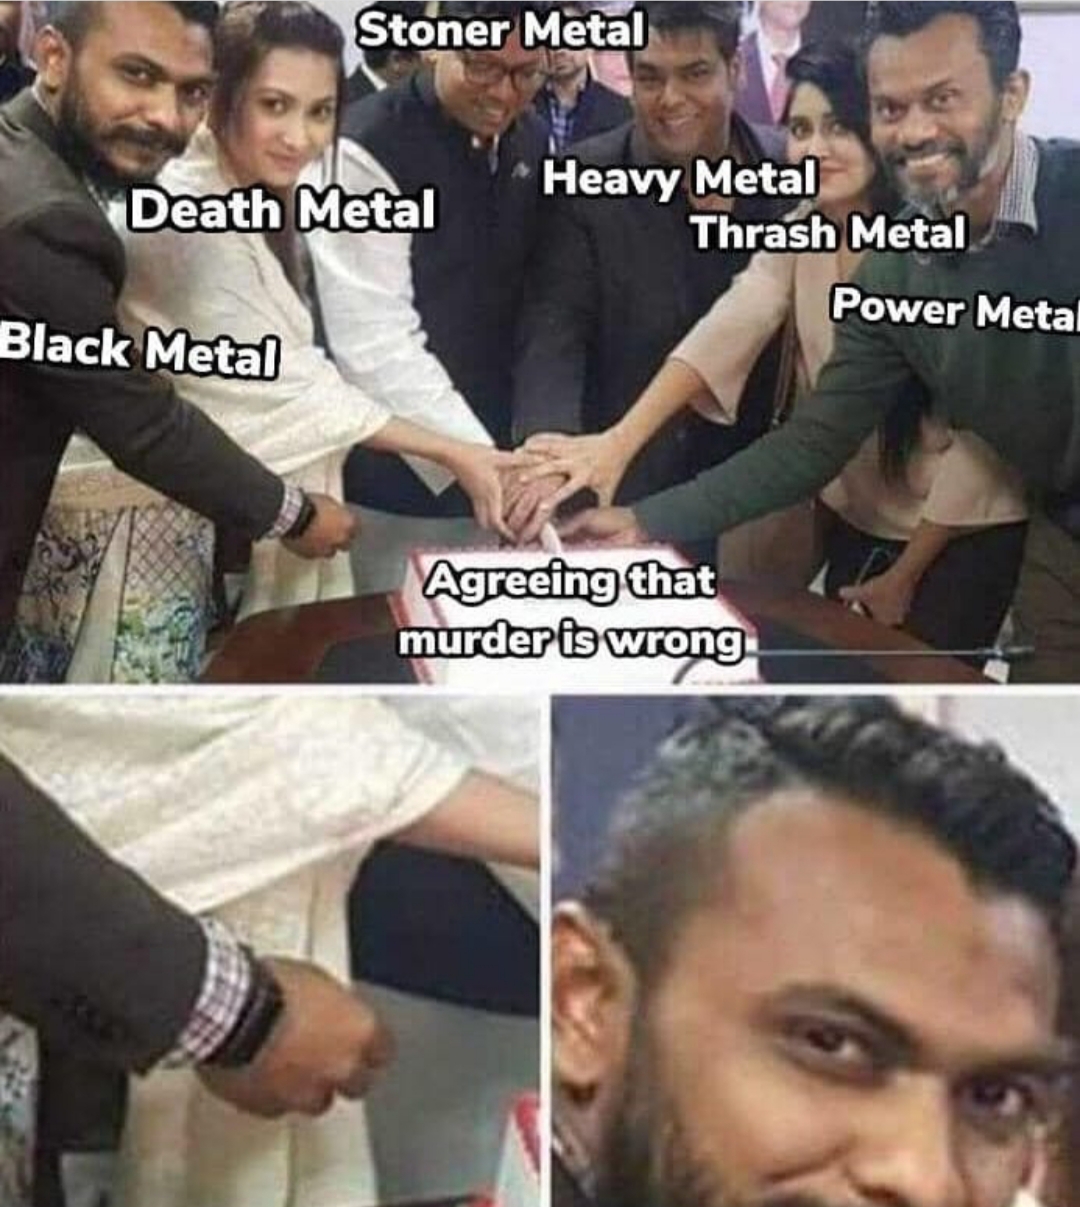 black metal memes - Stoner Metal Stoner Metal Death Metal Heavy Metal Thrash Metal Power Metal Black Metal Agreeing that murder is wrong